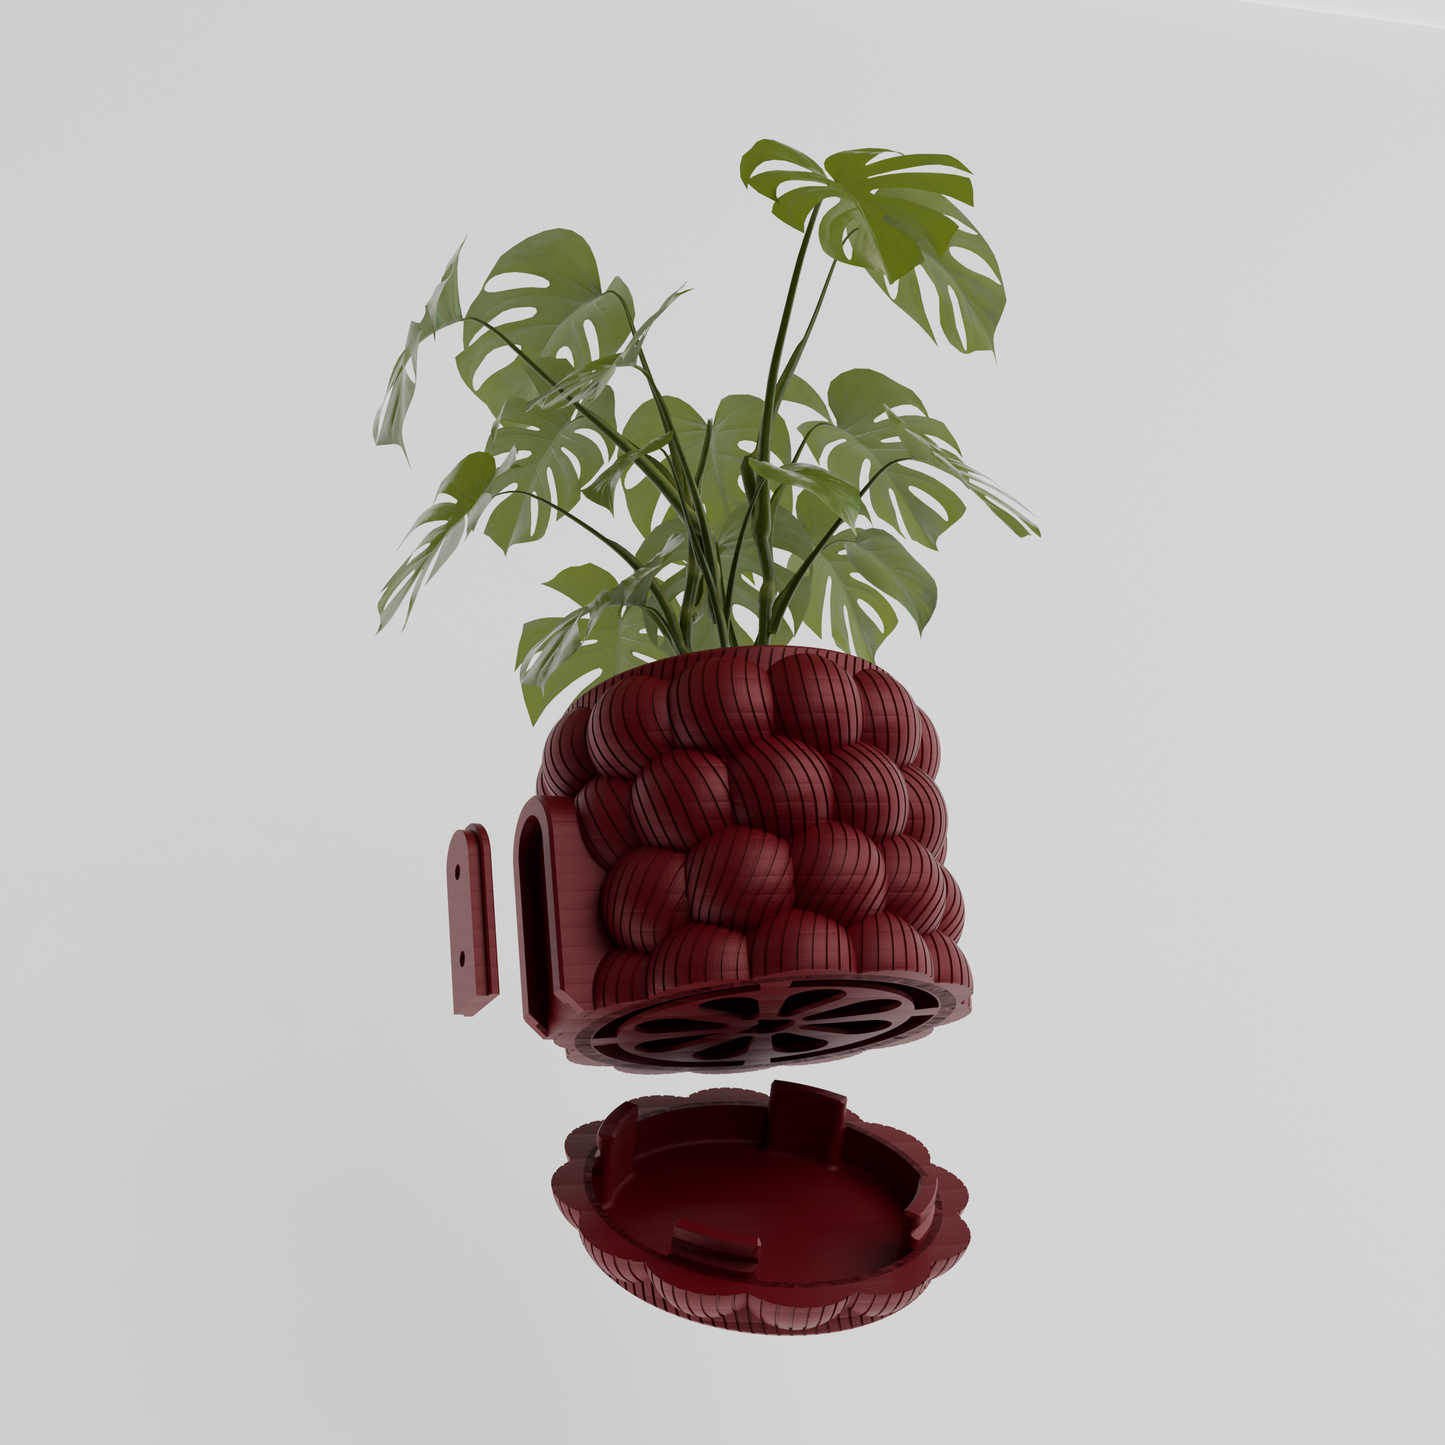 GoodBuy.ai 3D Printed Wall Pot - Elegant Home Décor Accent Piece